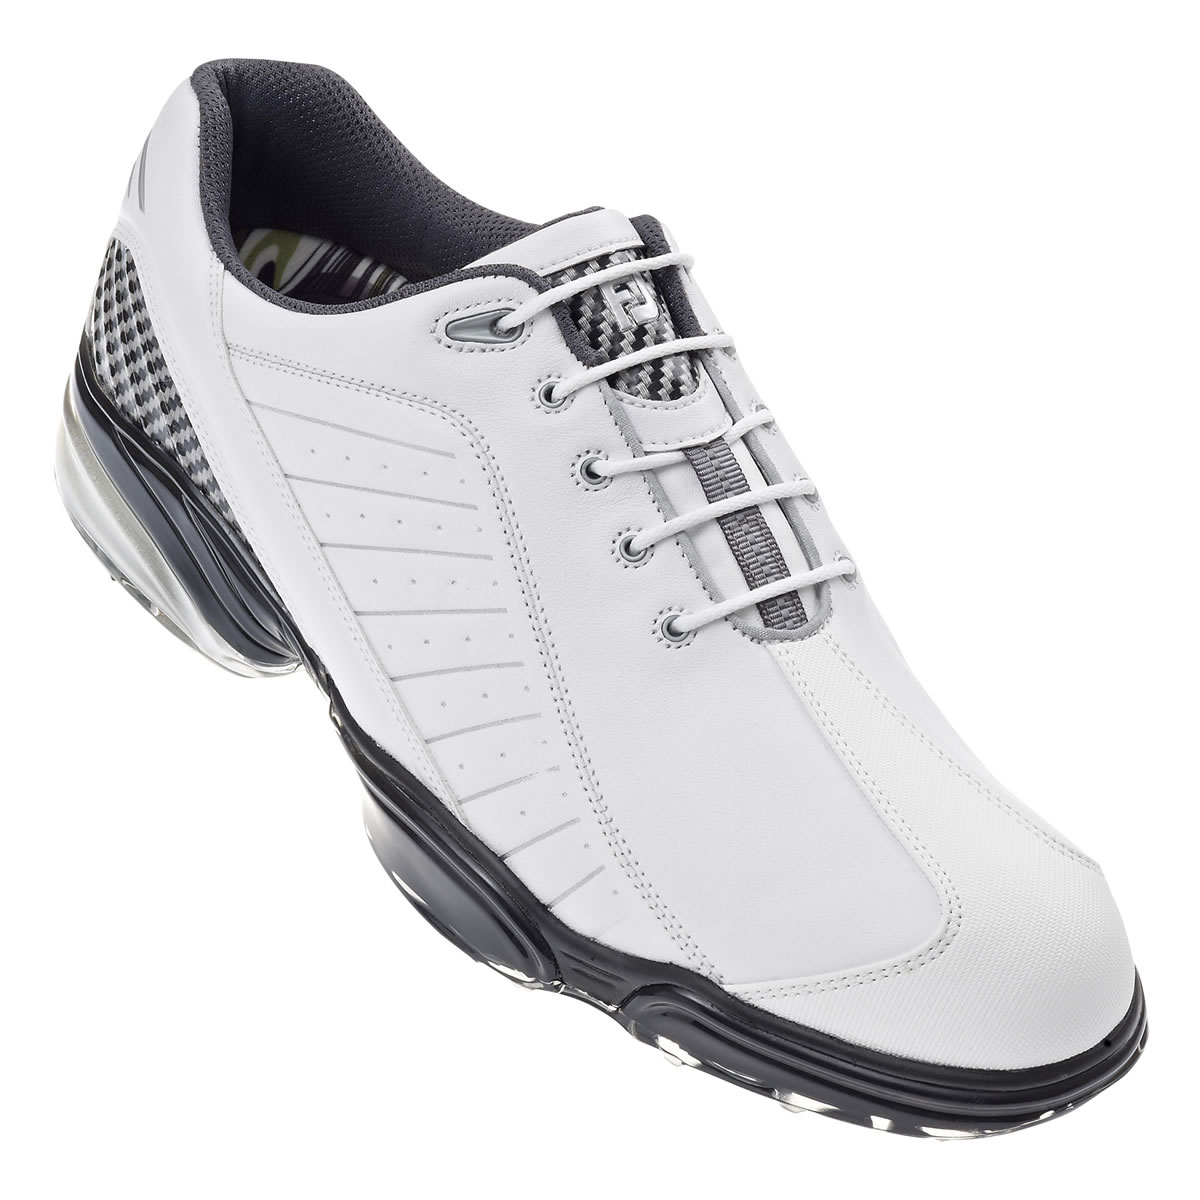 FootJoy Sport Golf Shoes White #53197